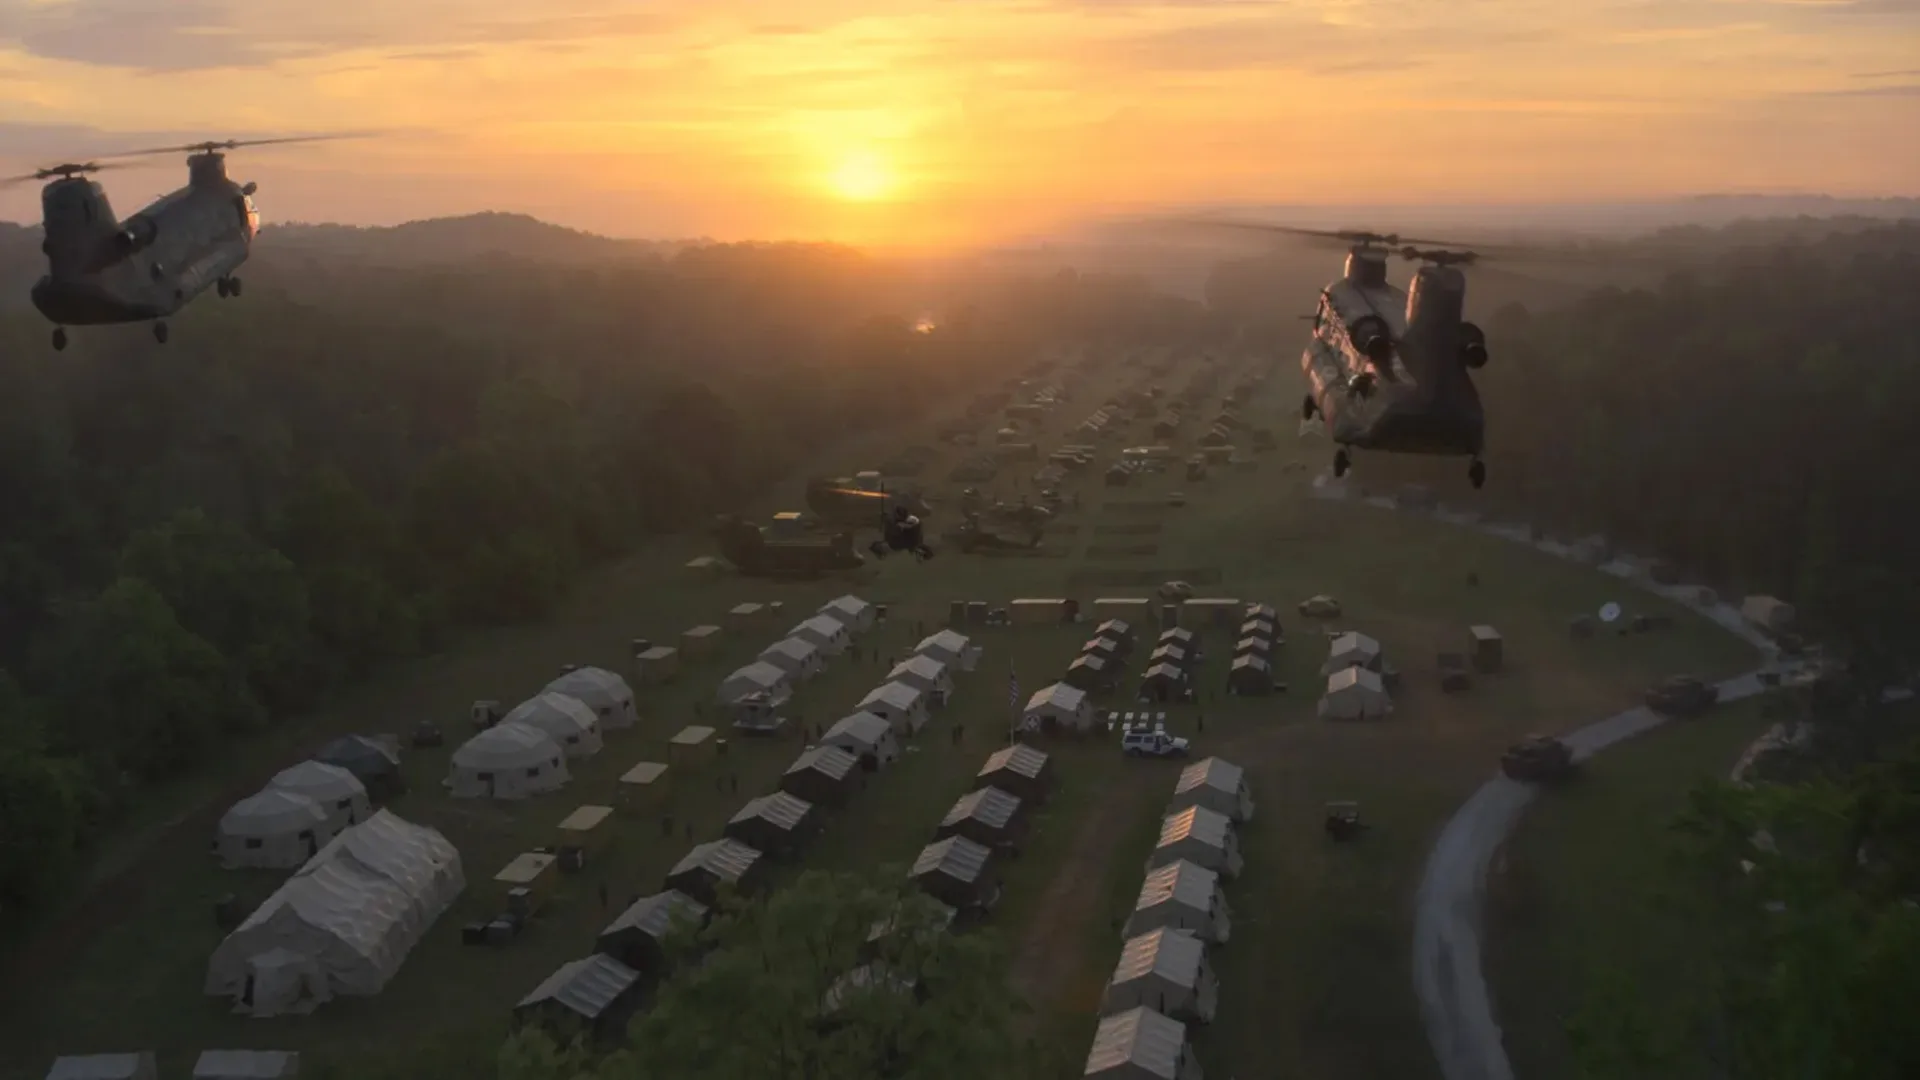 Guerra civil vista desde un helicóptero, campo de batalla.